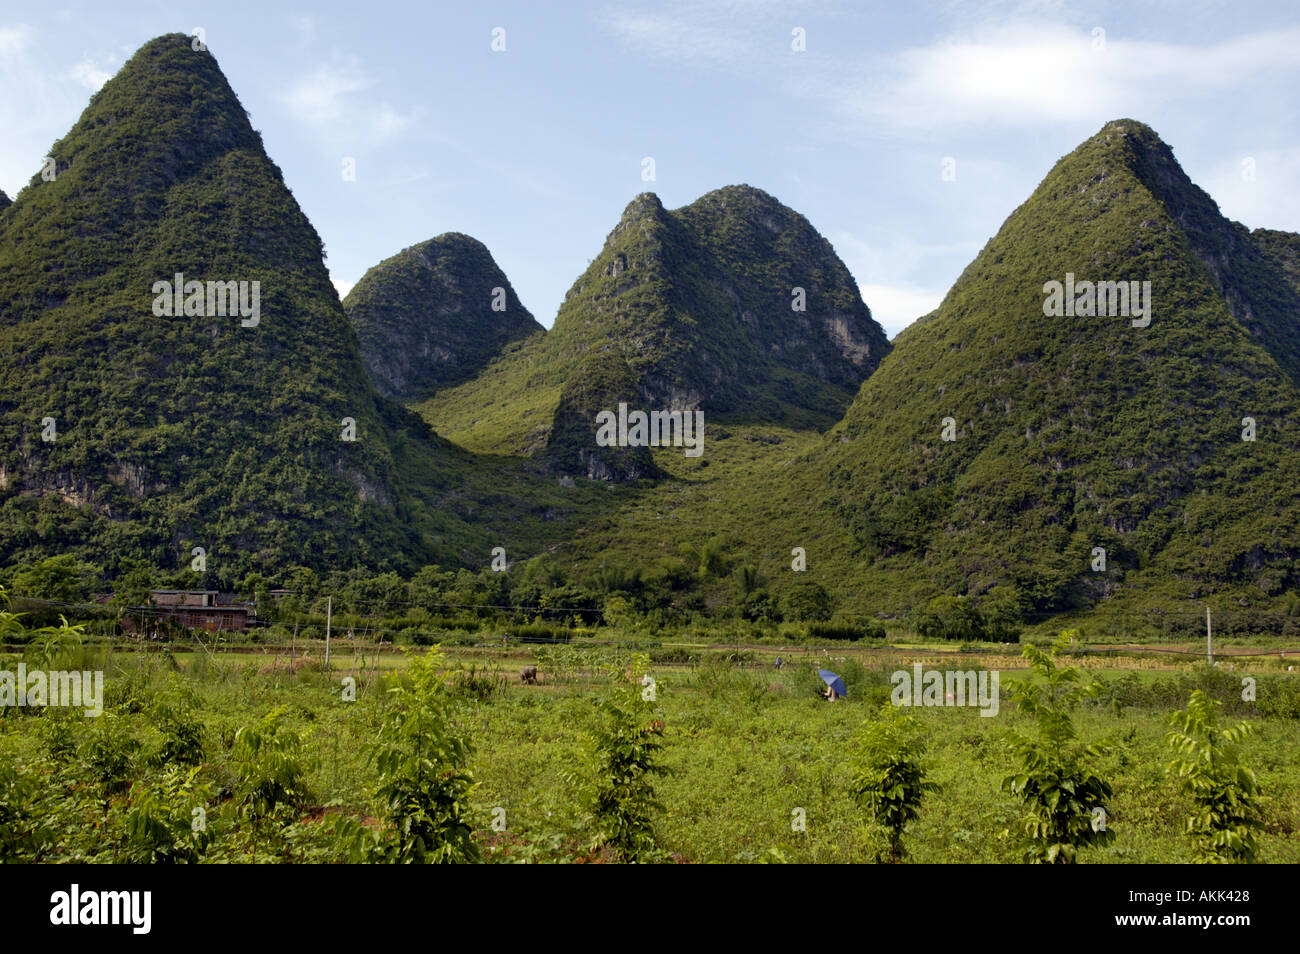 Limestone Karst peaks in Yangshuo County, Guangxi Province, China. Stock Photo